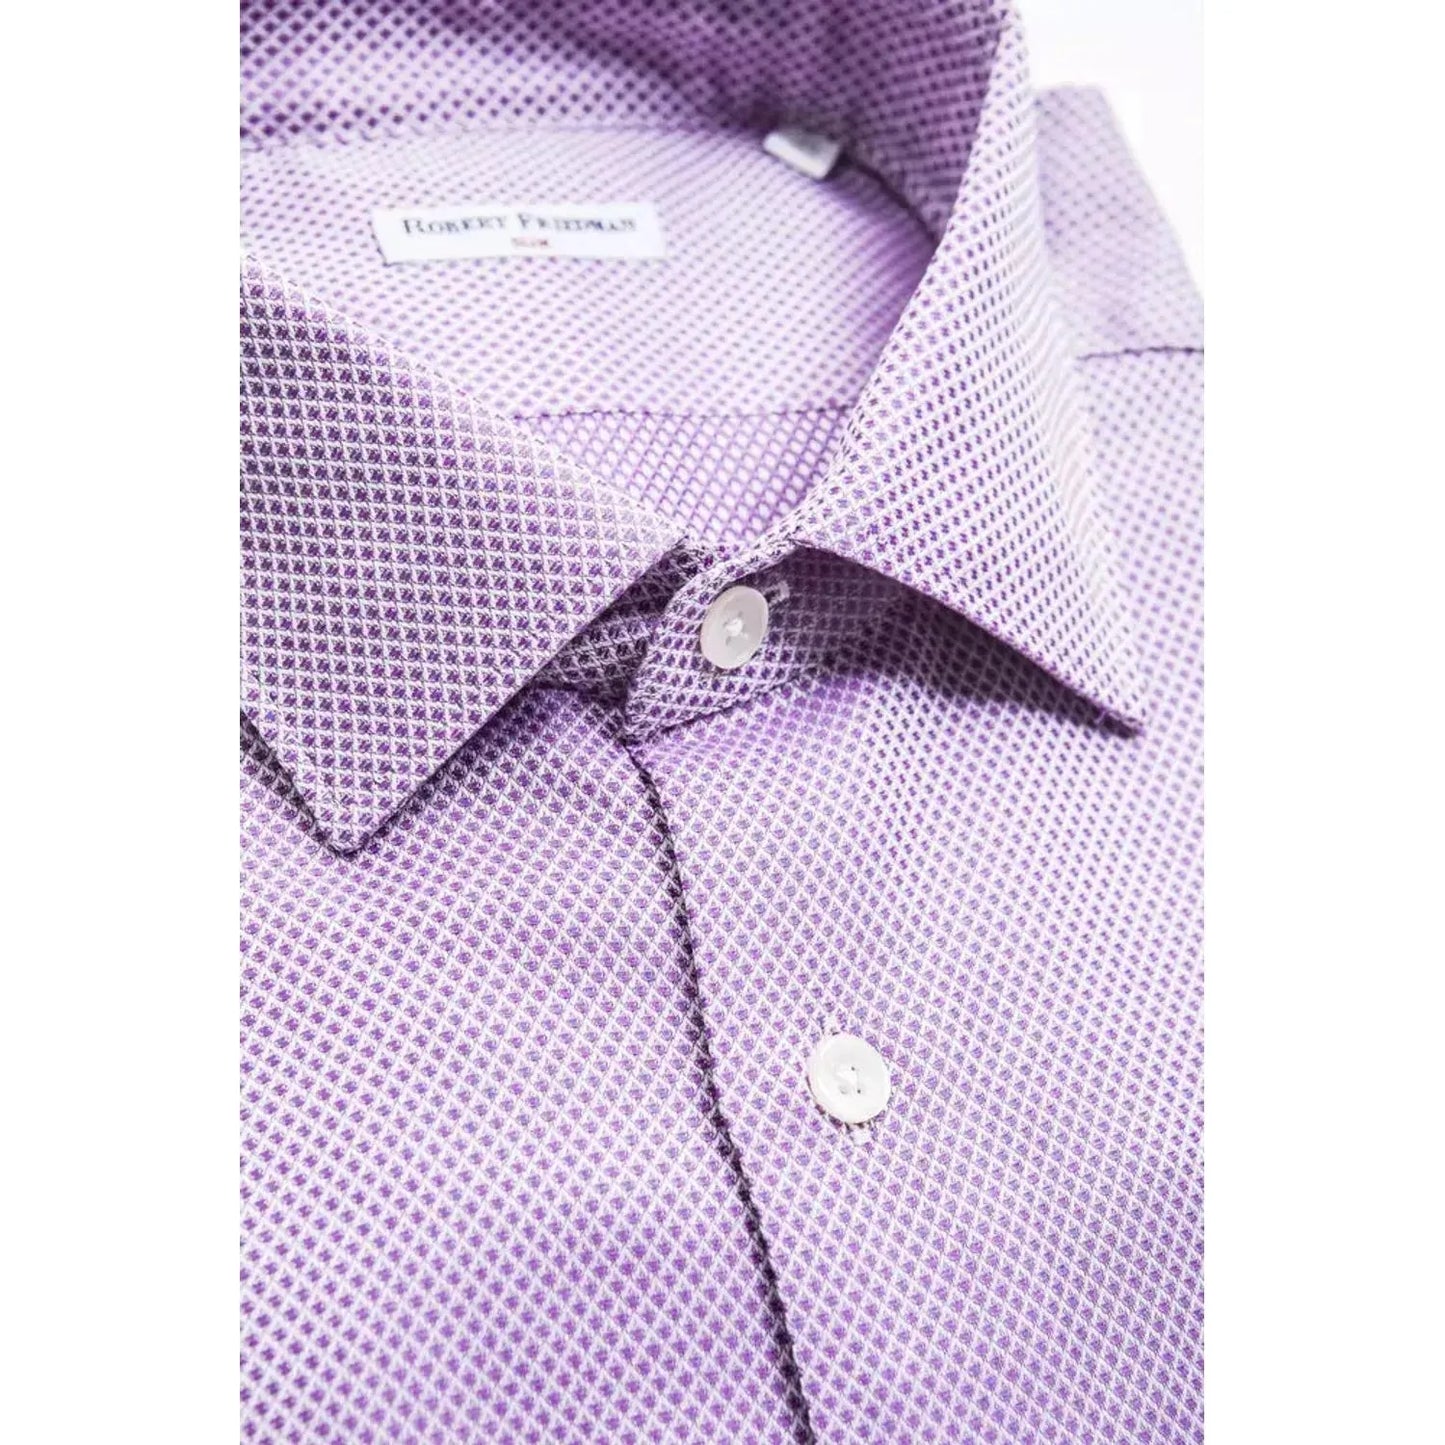 Robert Friedman Elegant Slim Collar Cotton Shirt pink-cotton-shirt-5 stock_product_image_20393_235020364-17-5a402506-b26.webp